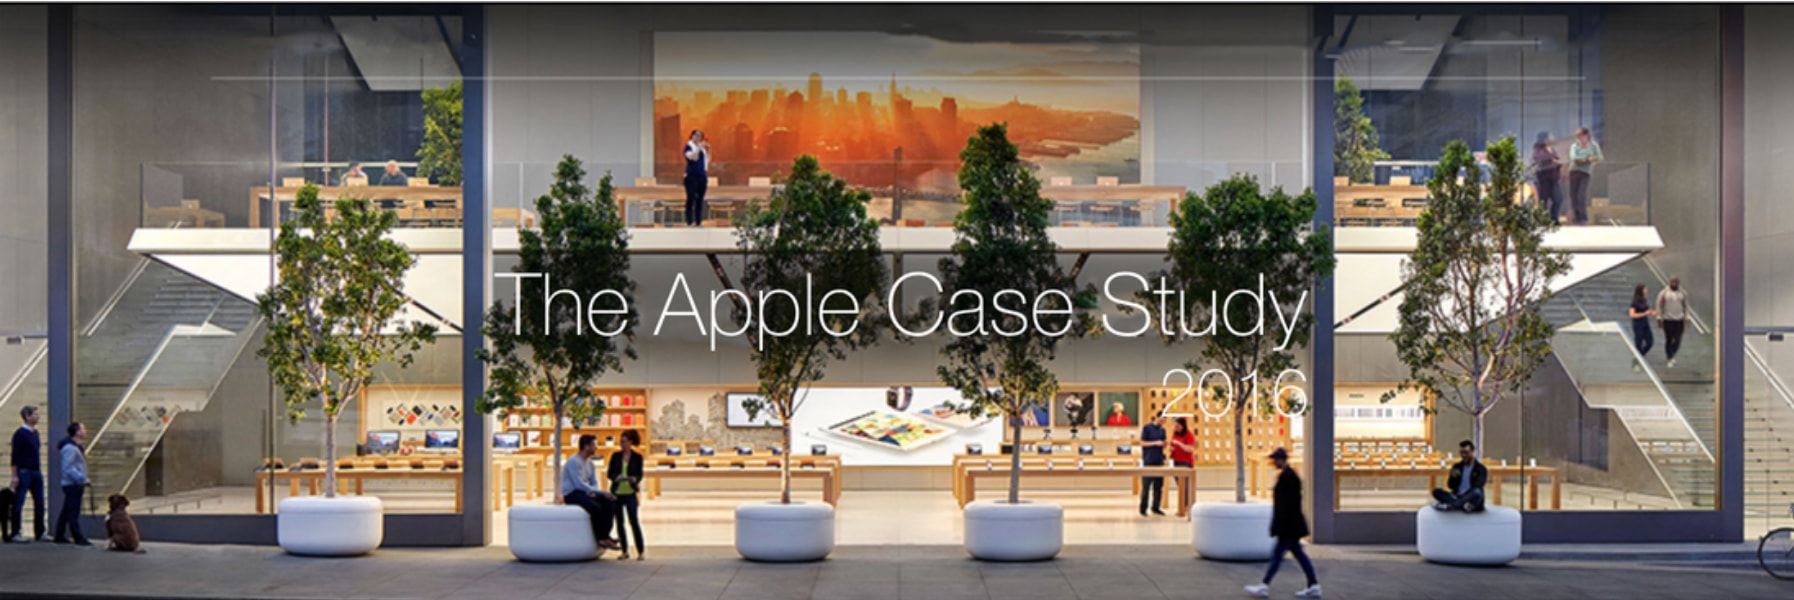 The Apple Case Study